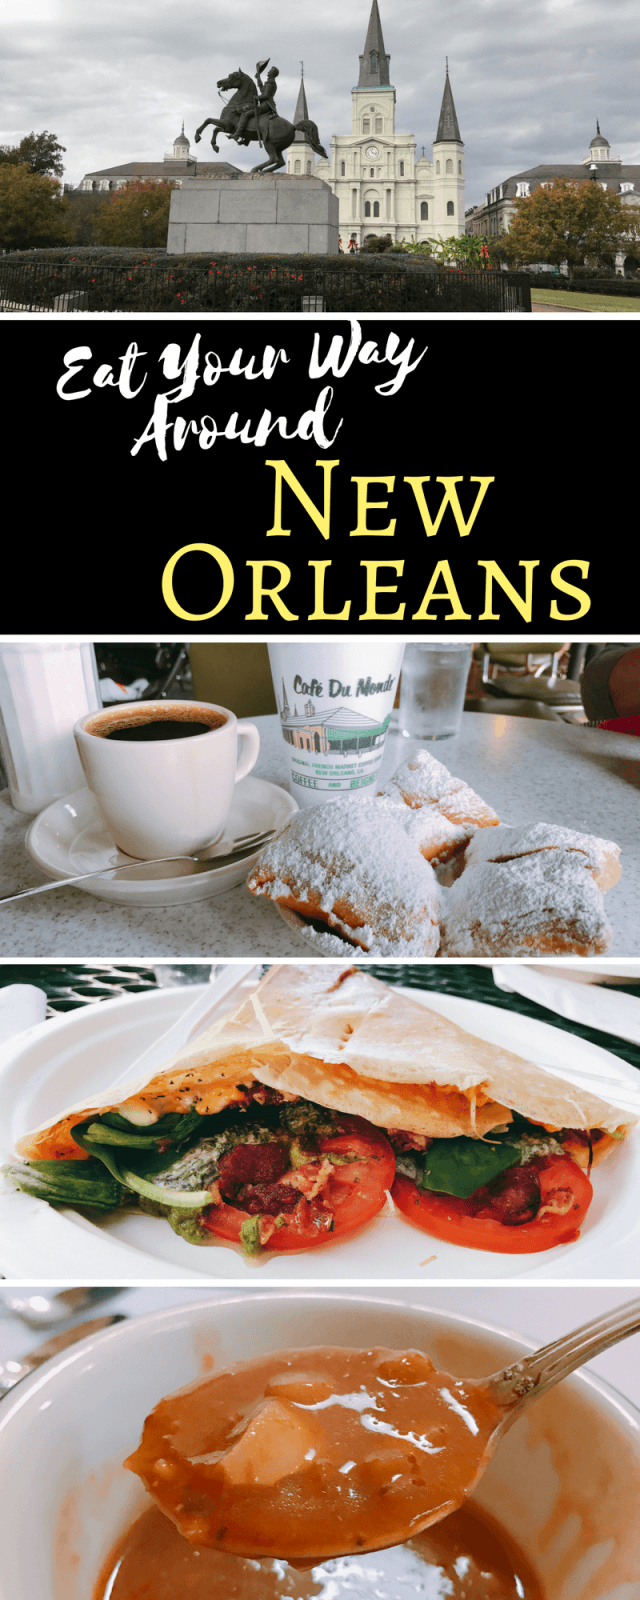 Eat Your Way Thru these New Orleans Restaurants